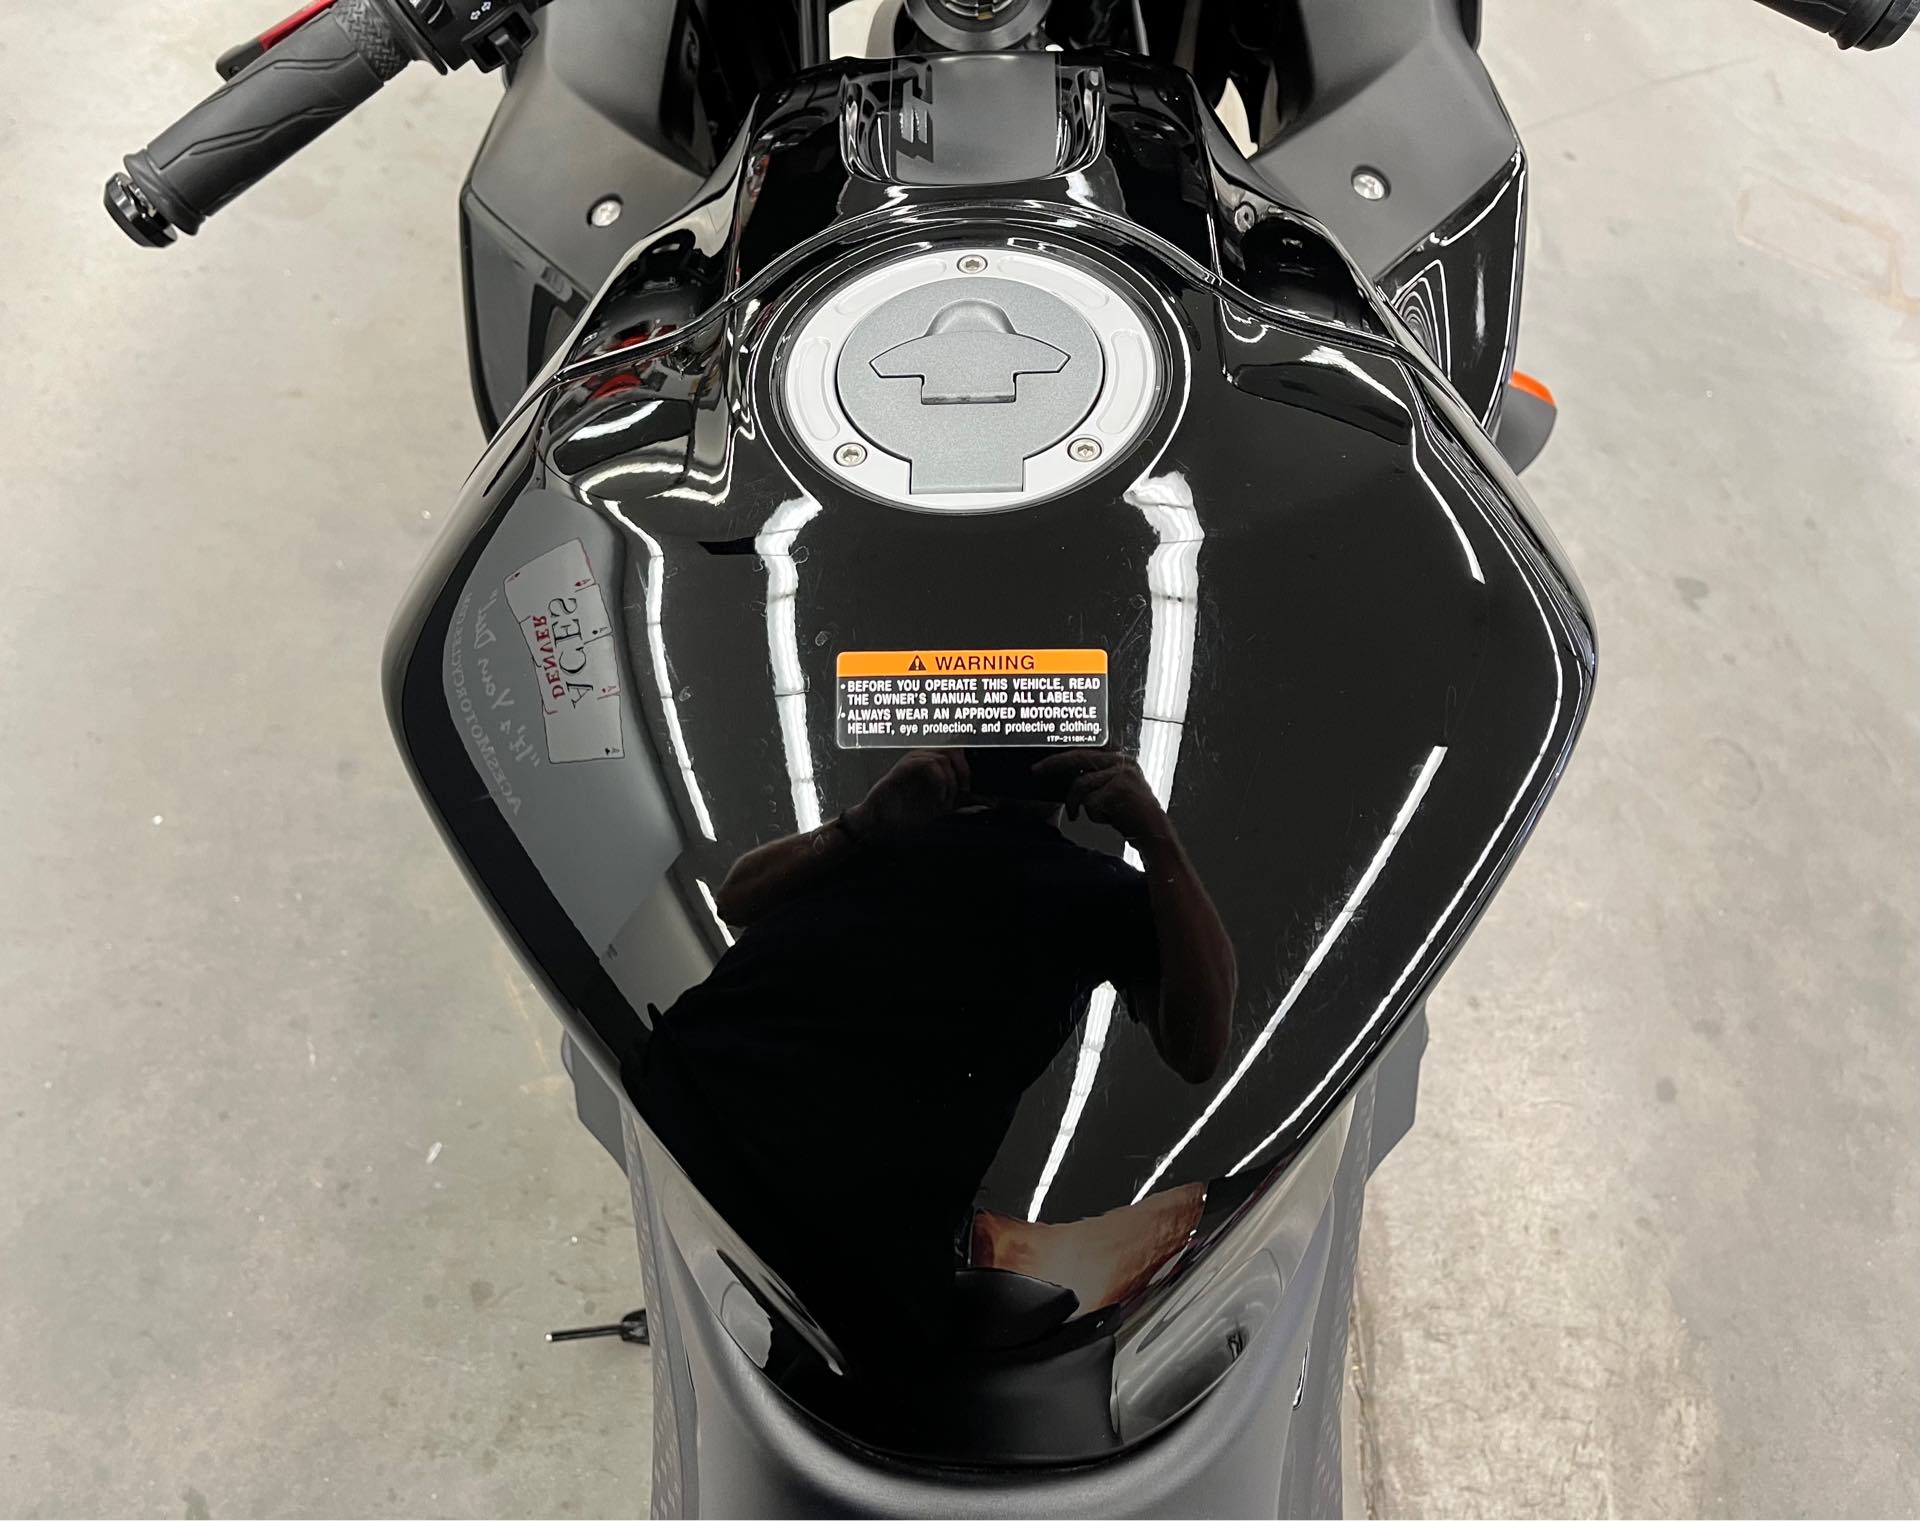 2020 Yamaha YZF R3 at Aces Motorcycles - Denver